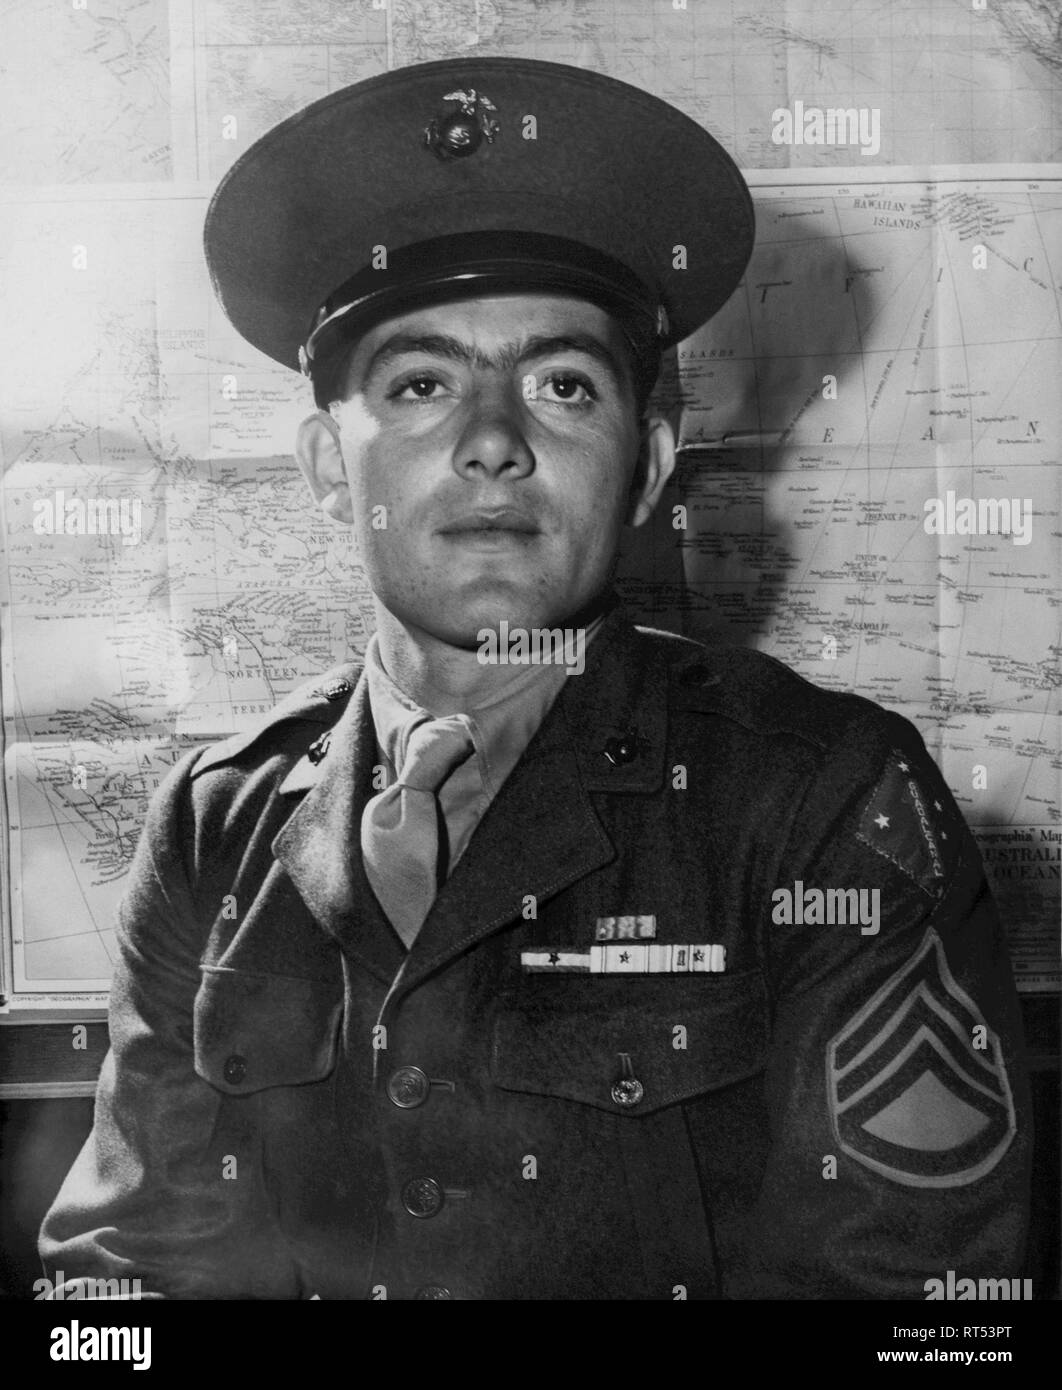 Weltkrieg II Foto von Sergeant John Basilone, September 1943. Stockfoto